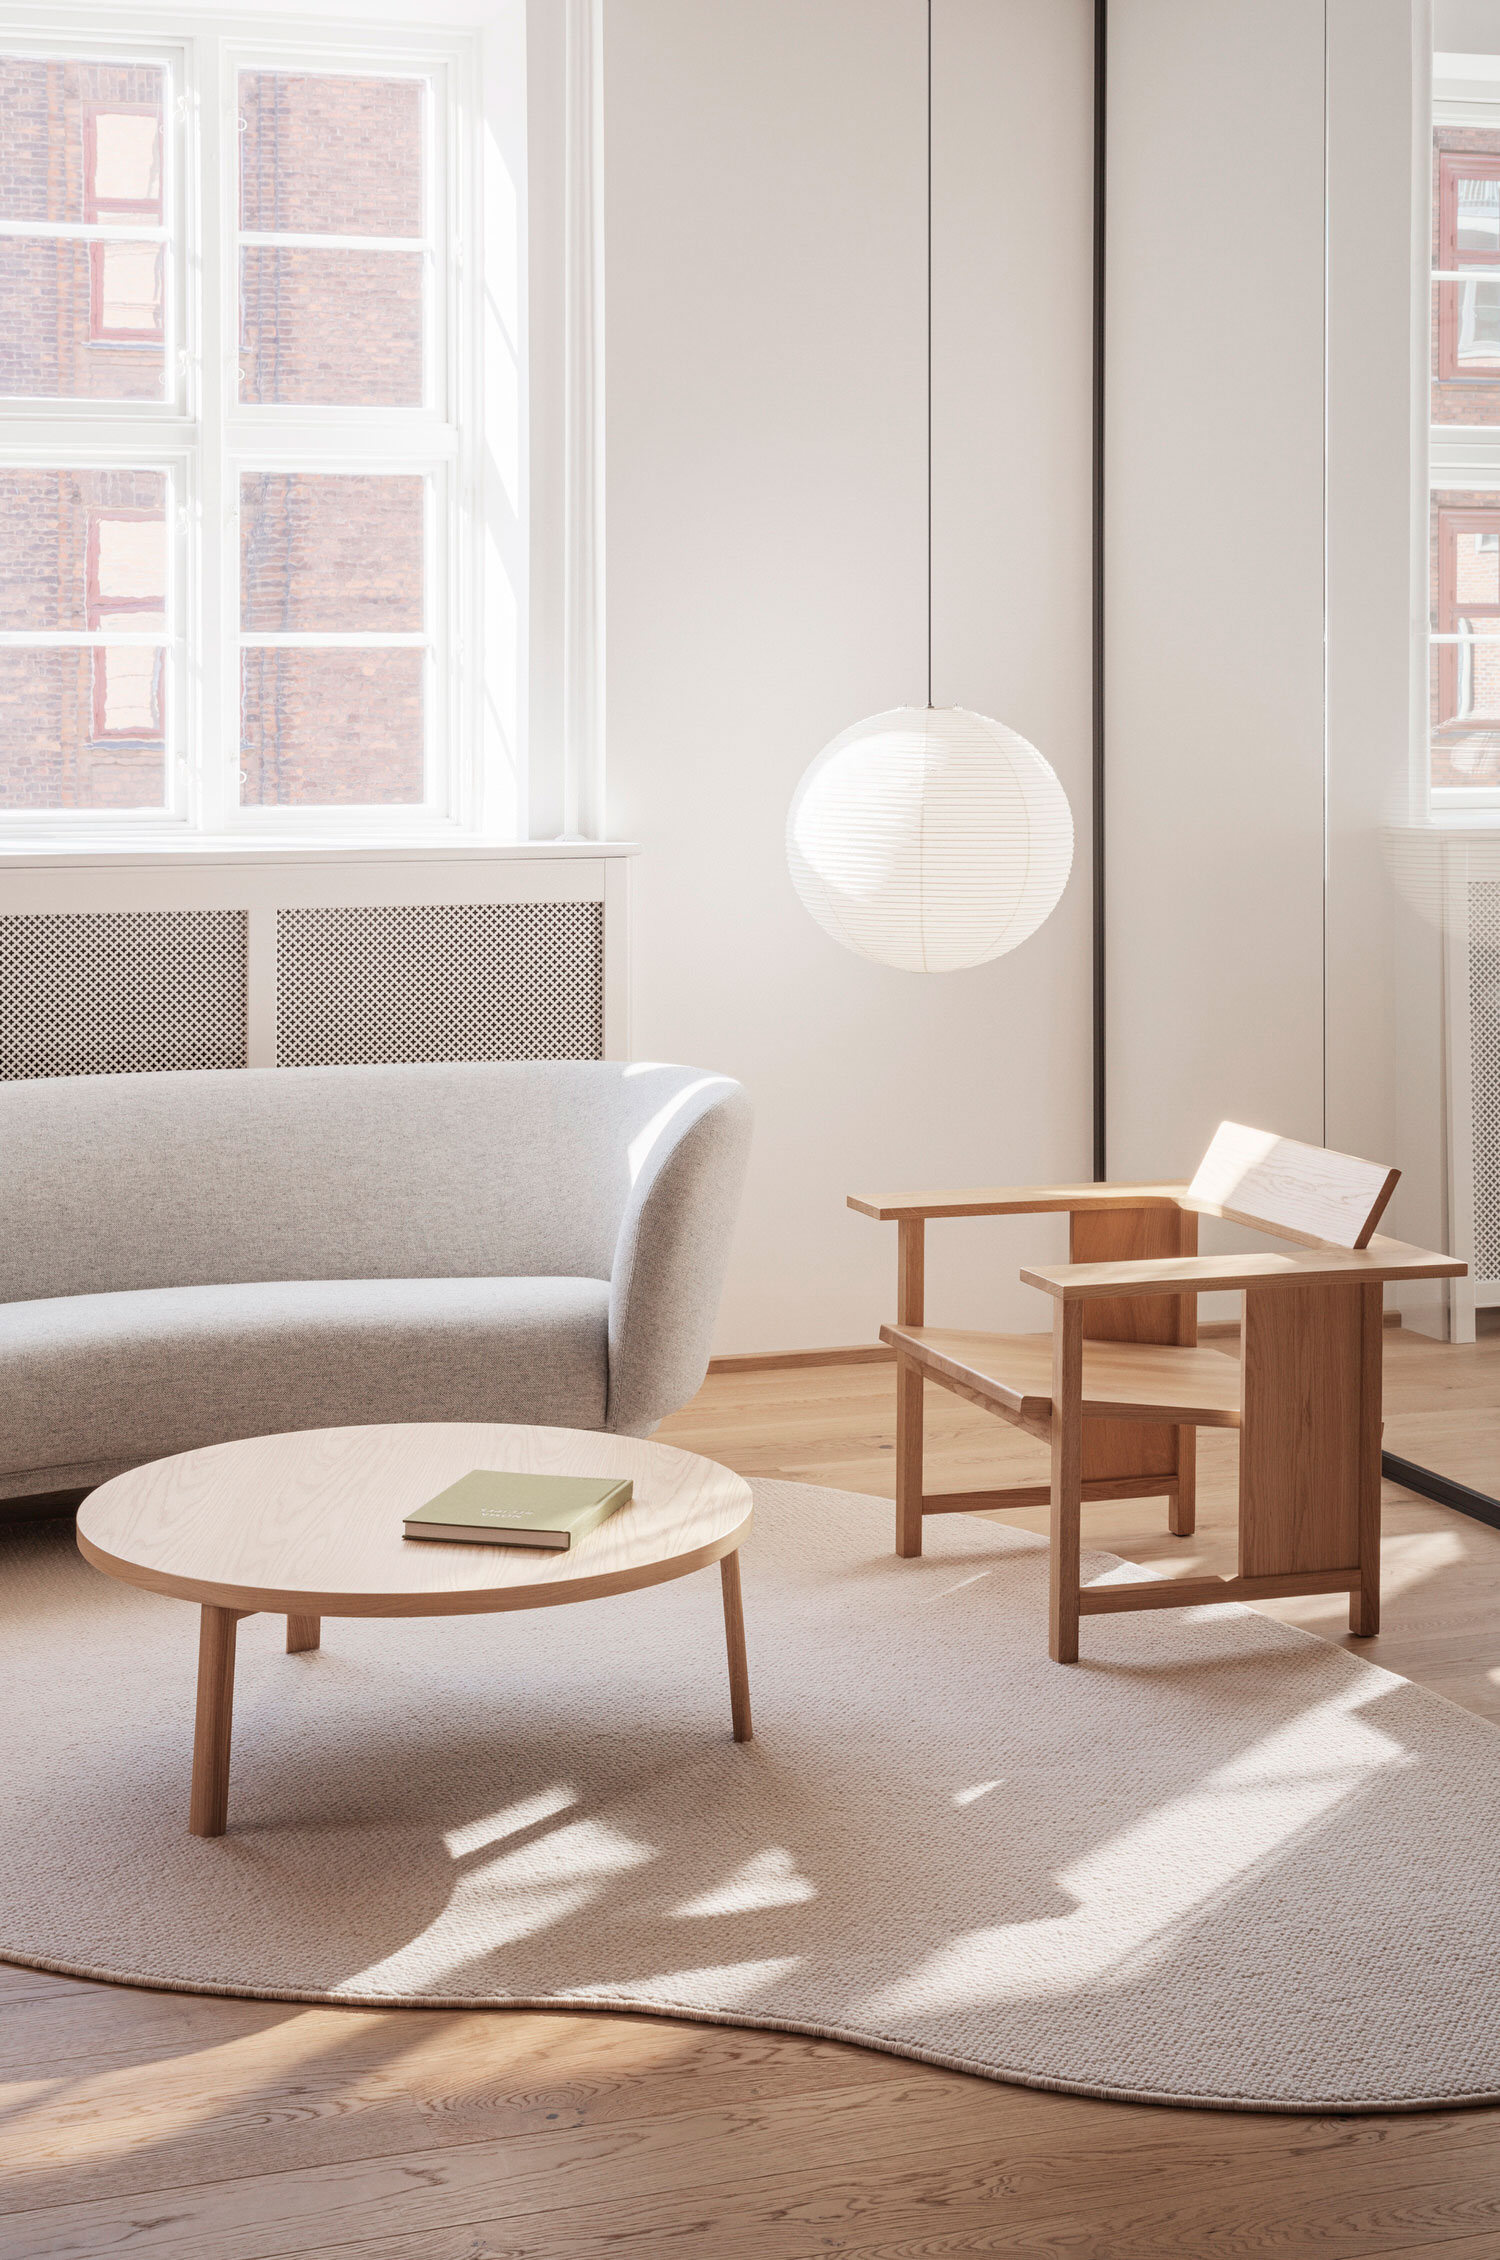 Work & Co Office in Copenhagen | Office Design Inspiration | Softer Volumes